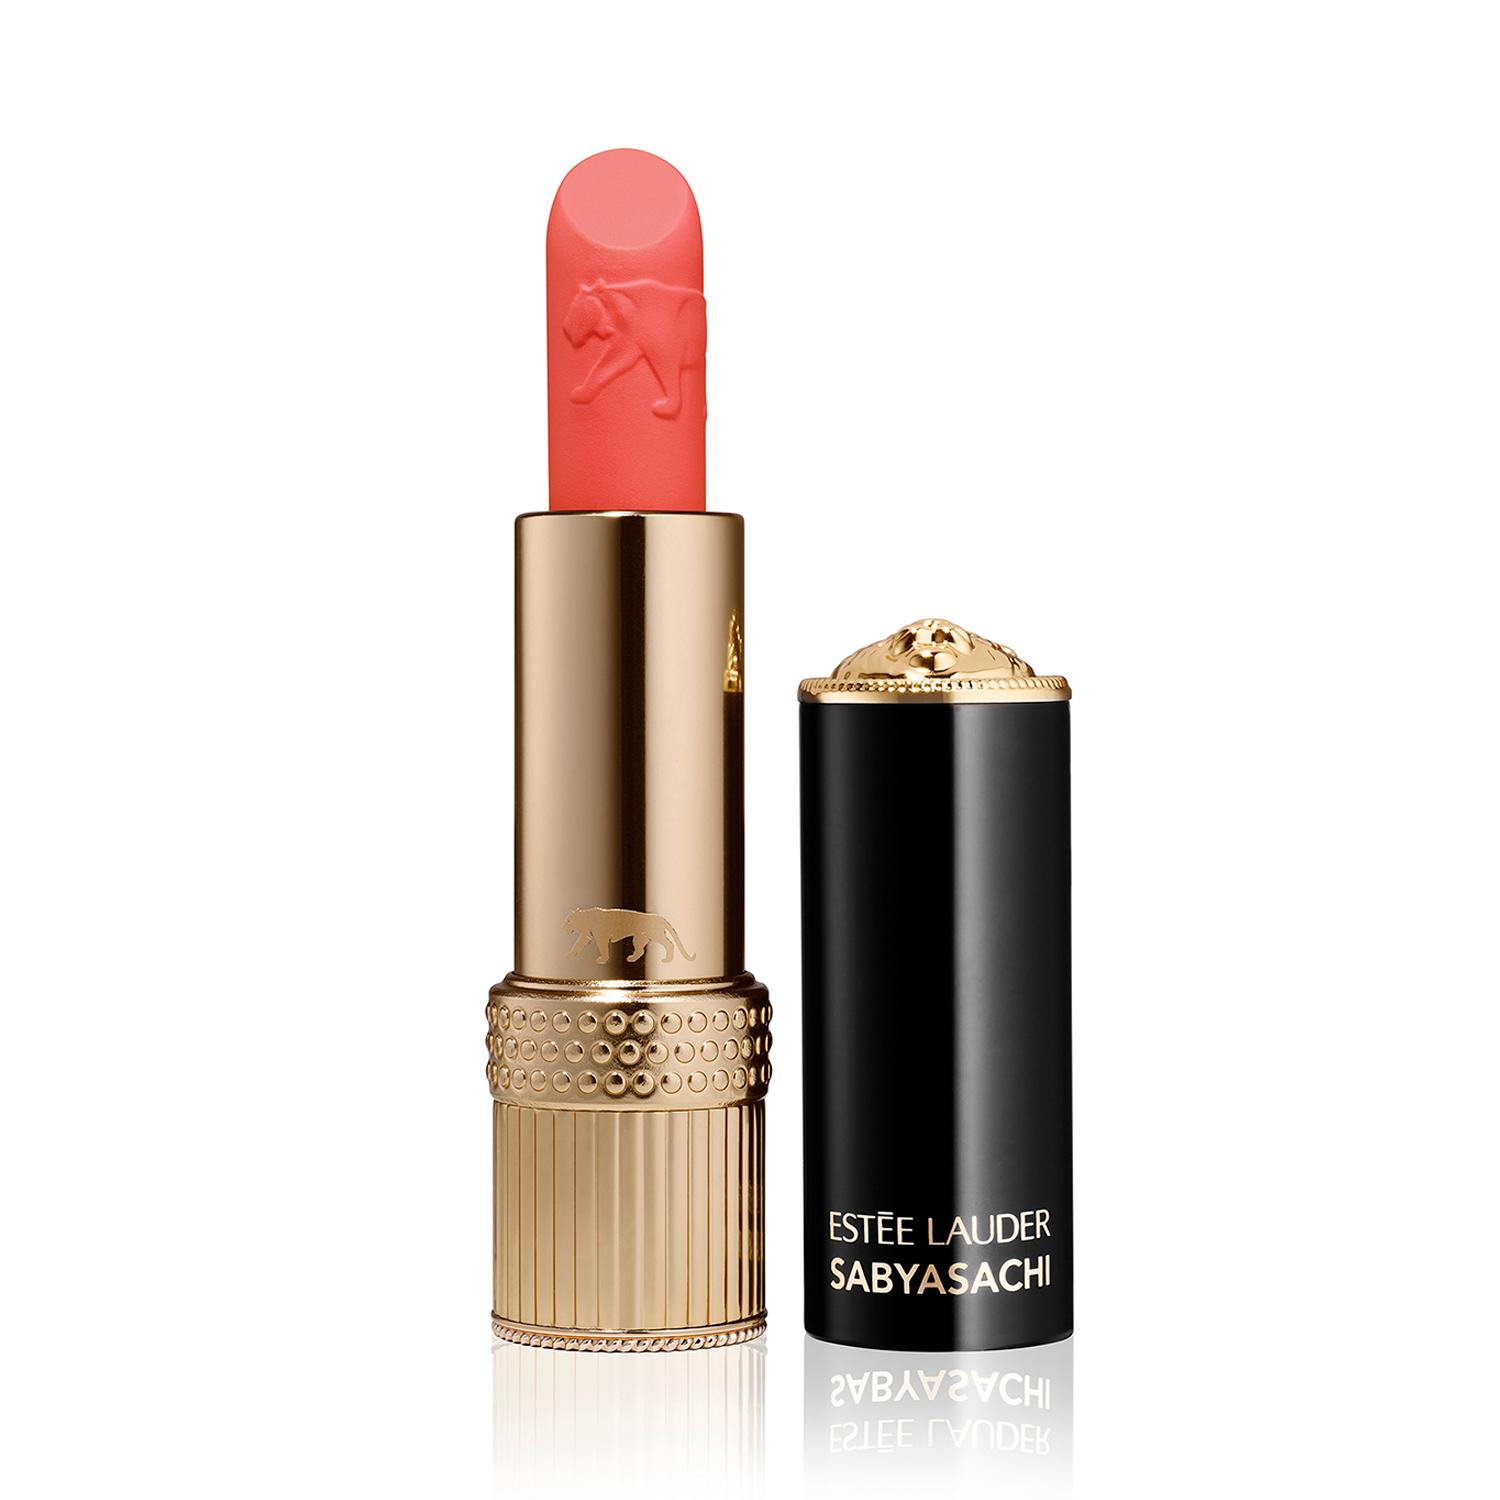 Estee Lauder | Estee Lauder Sabyasachi Limited Edition Lipstick Collection - Tropical Tangerine (3.8 g)